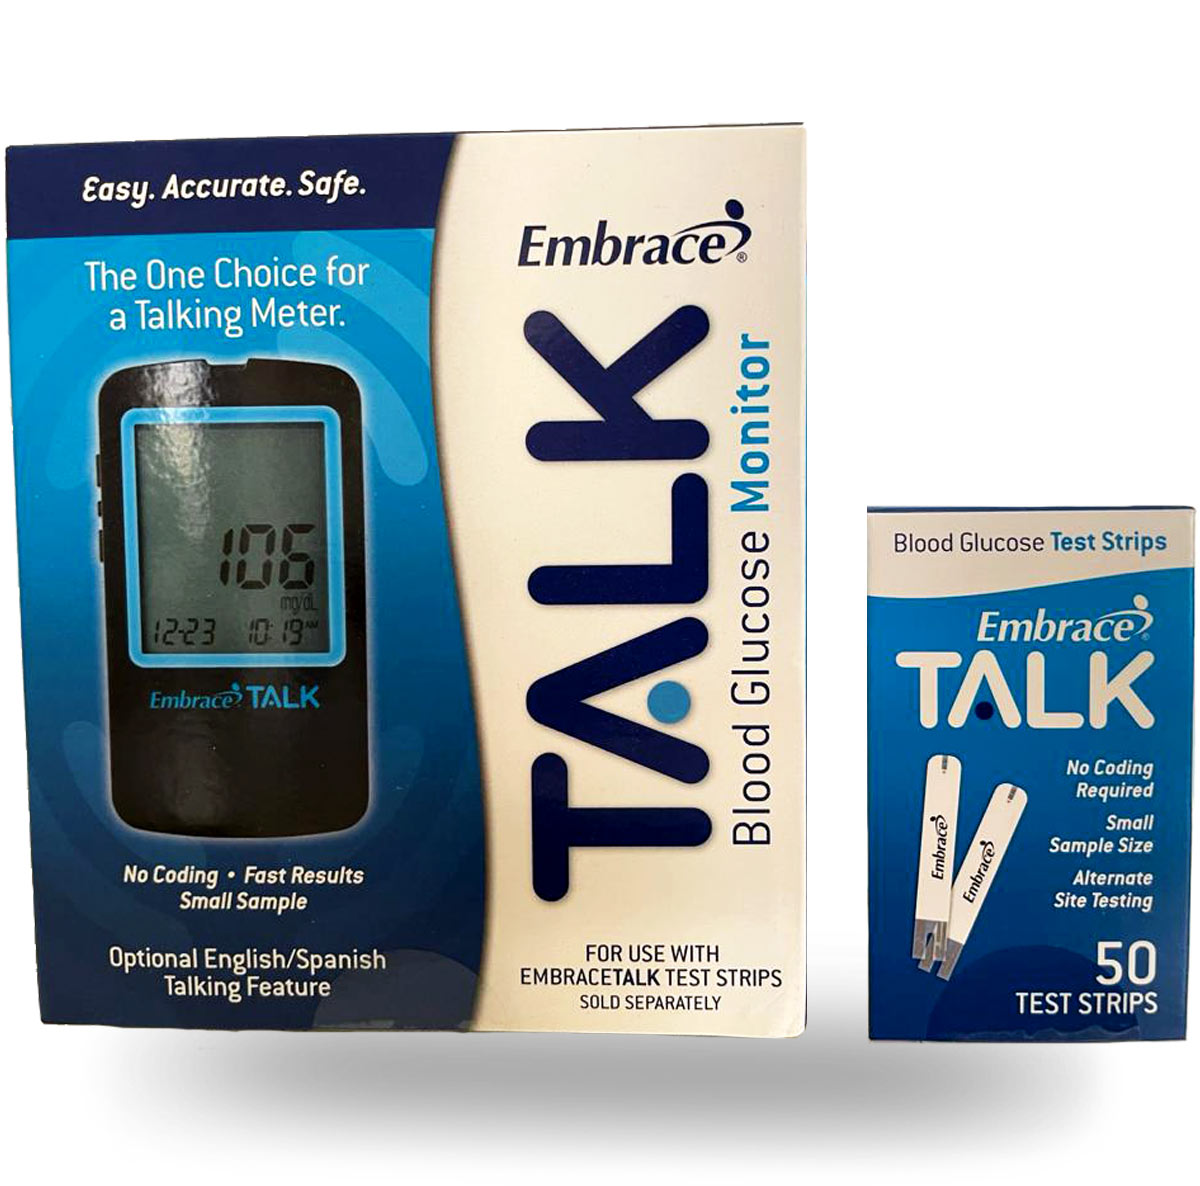 Embrace TALK Blood Glucose 50 Test Strips PLUS METER TALK.